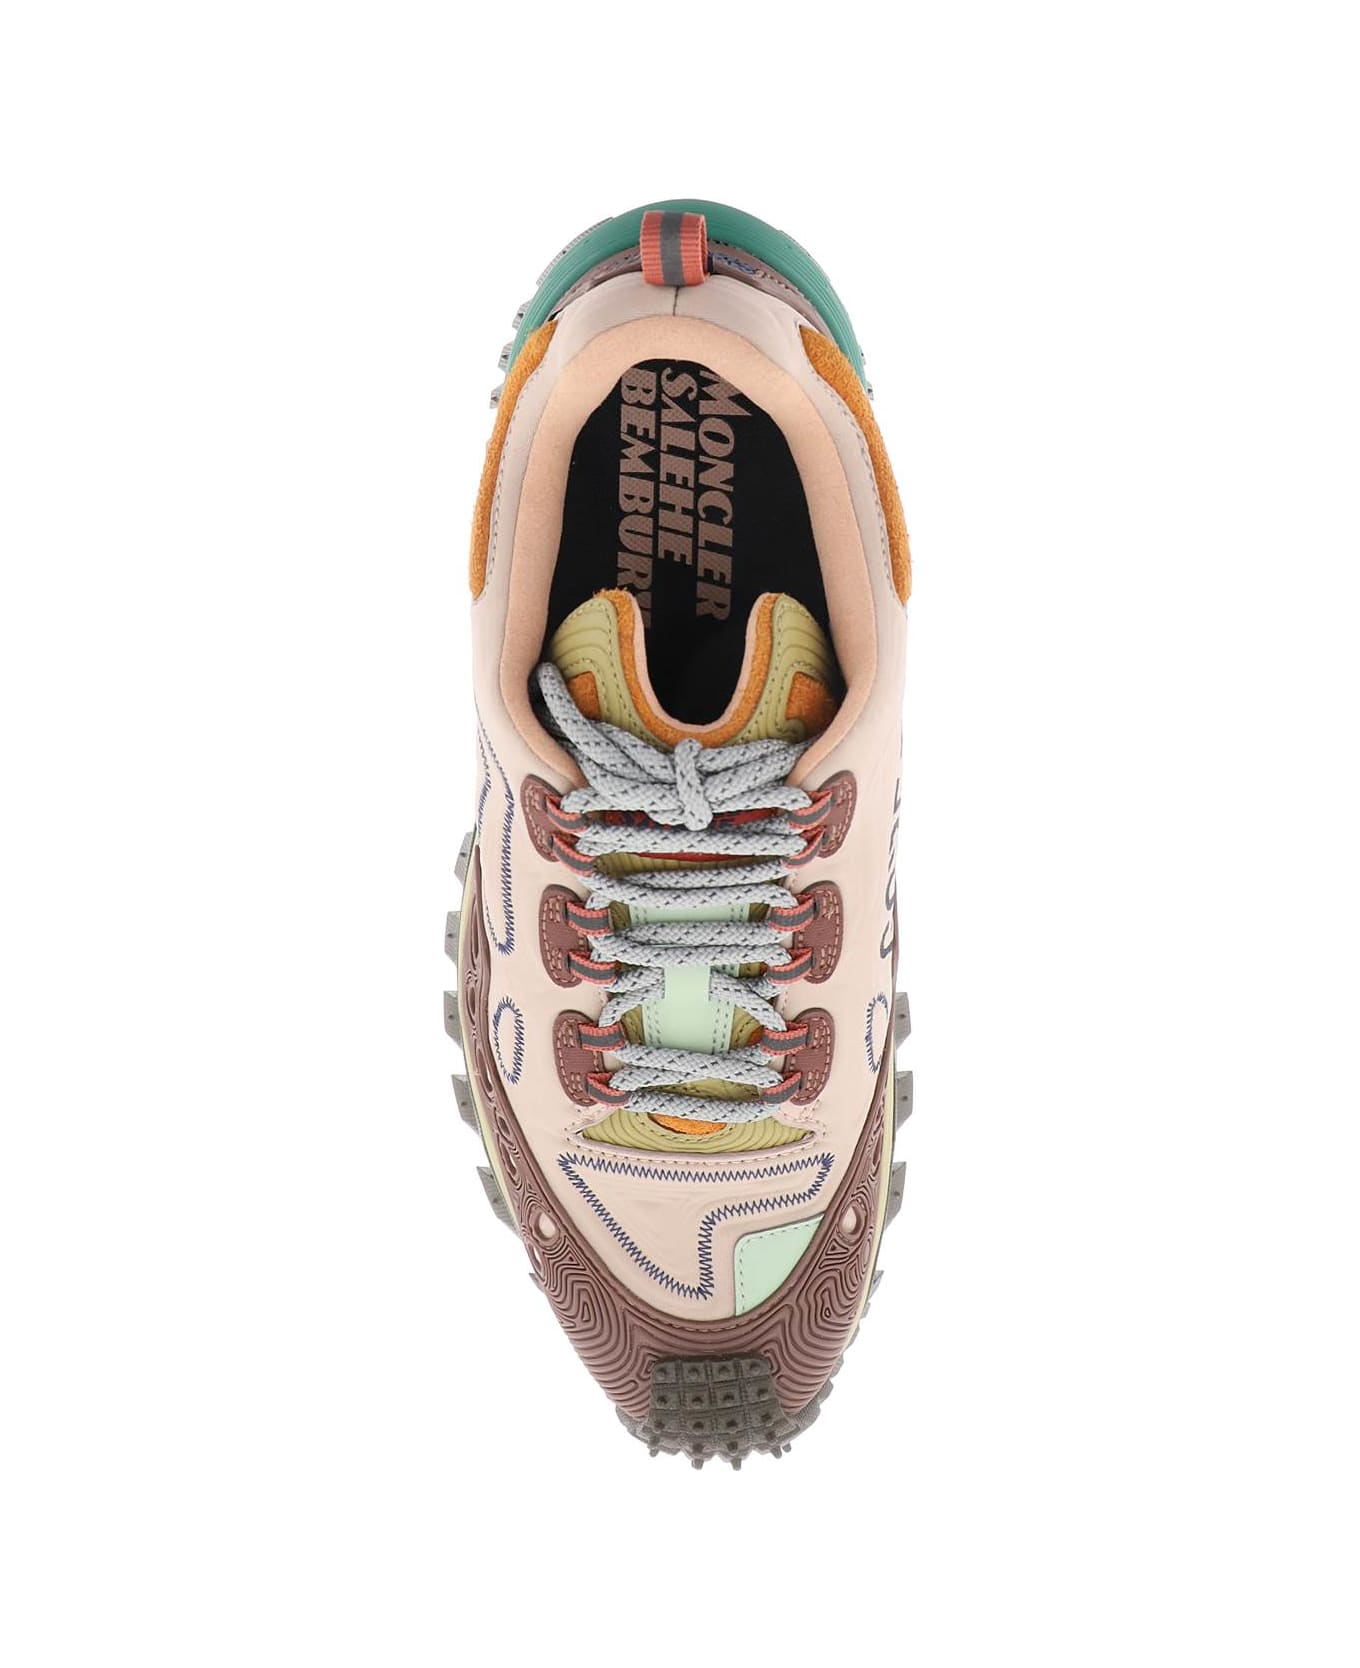 Moncler Genius Trailgrip Grain Sneakers - Multicolor スニーカー